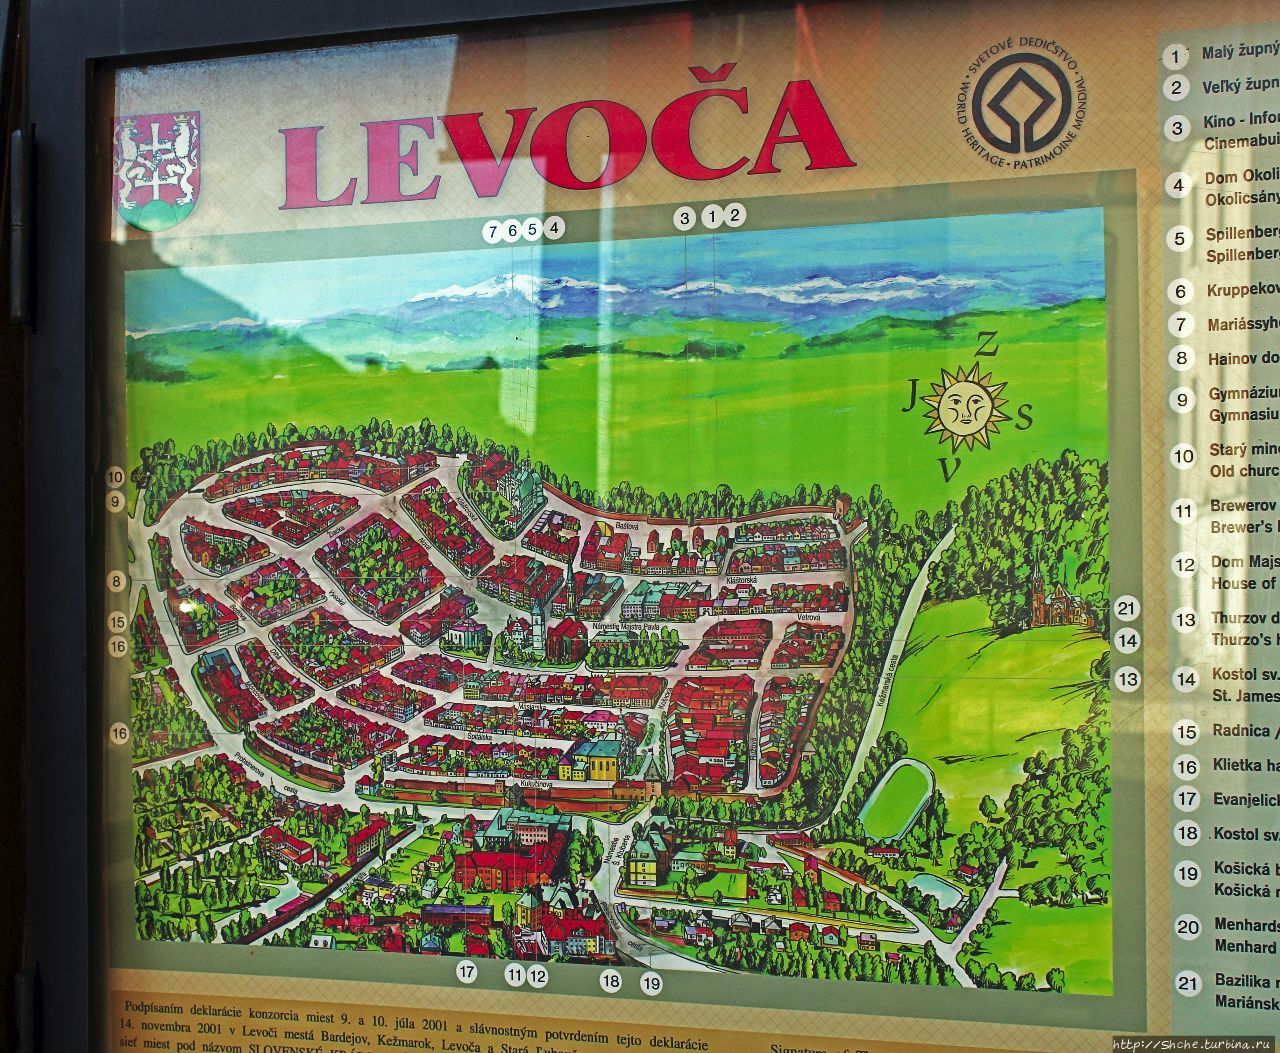 Скромная Левоча (объект ЮНЕСКО 620-002) Левоча, Словакия